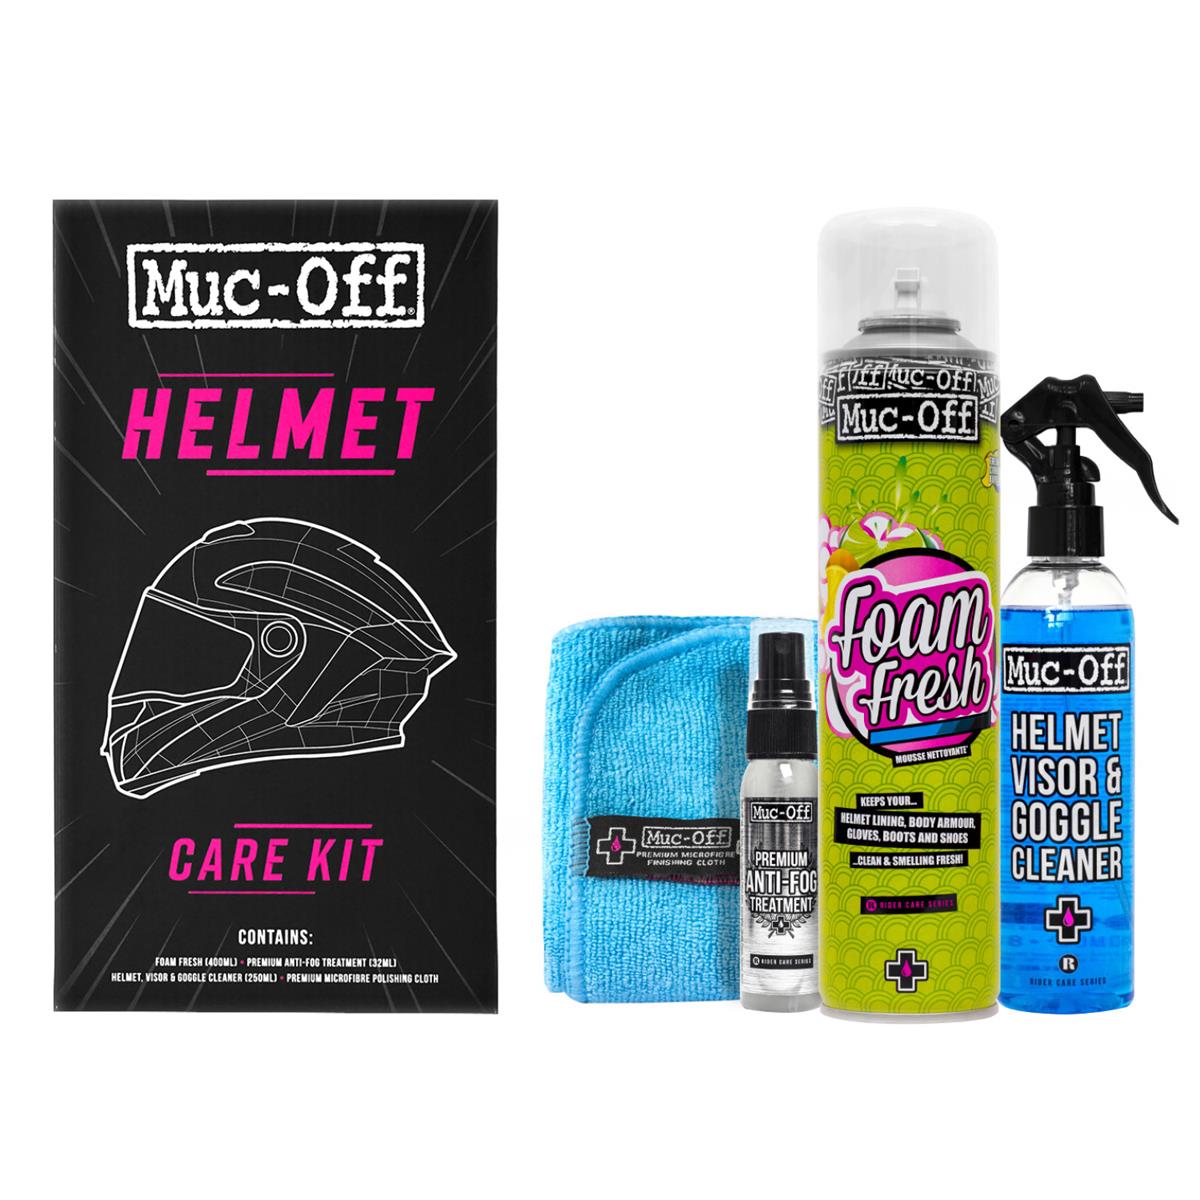 Muc-Off Kit de Cuidado para el Casco - Helmet Care Kit